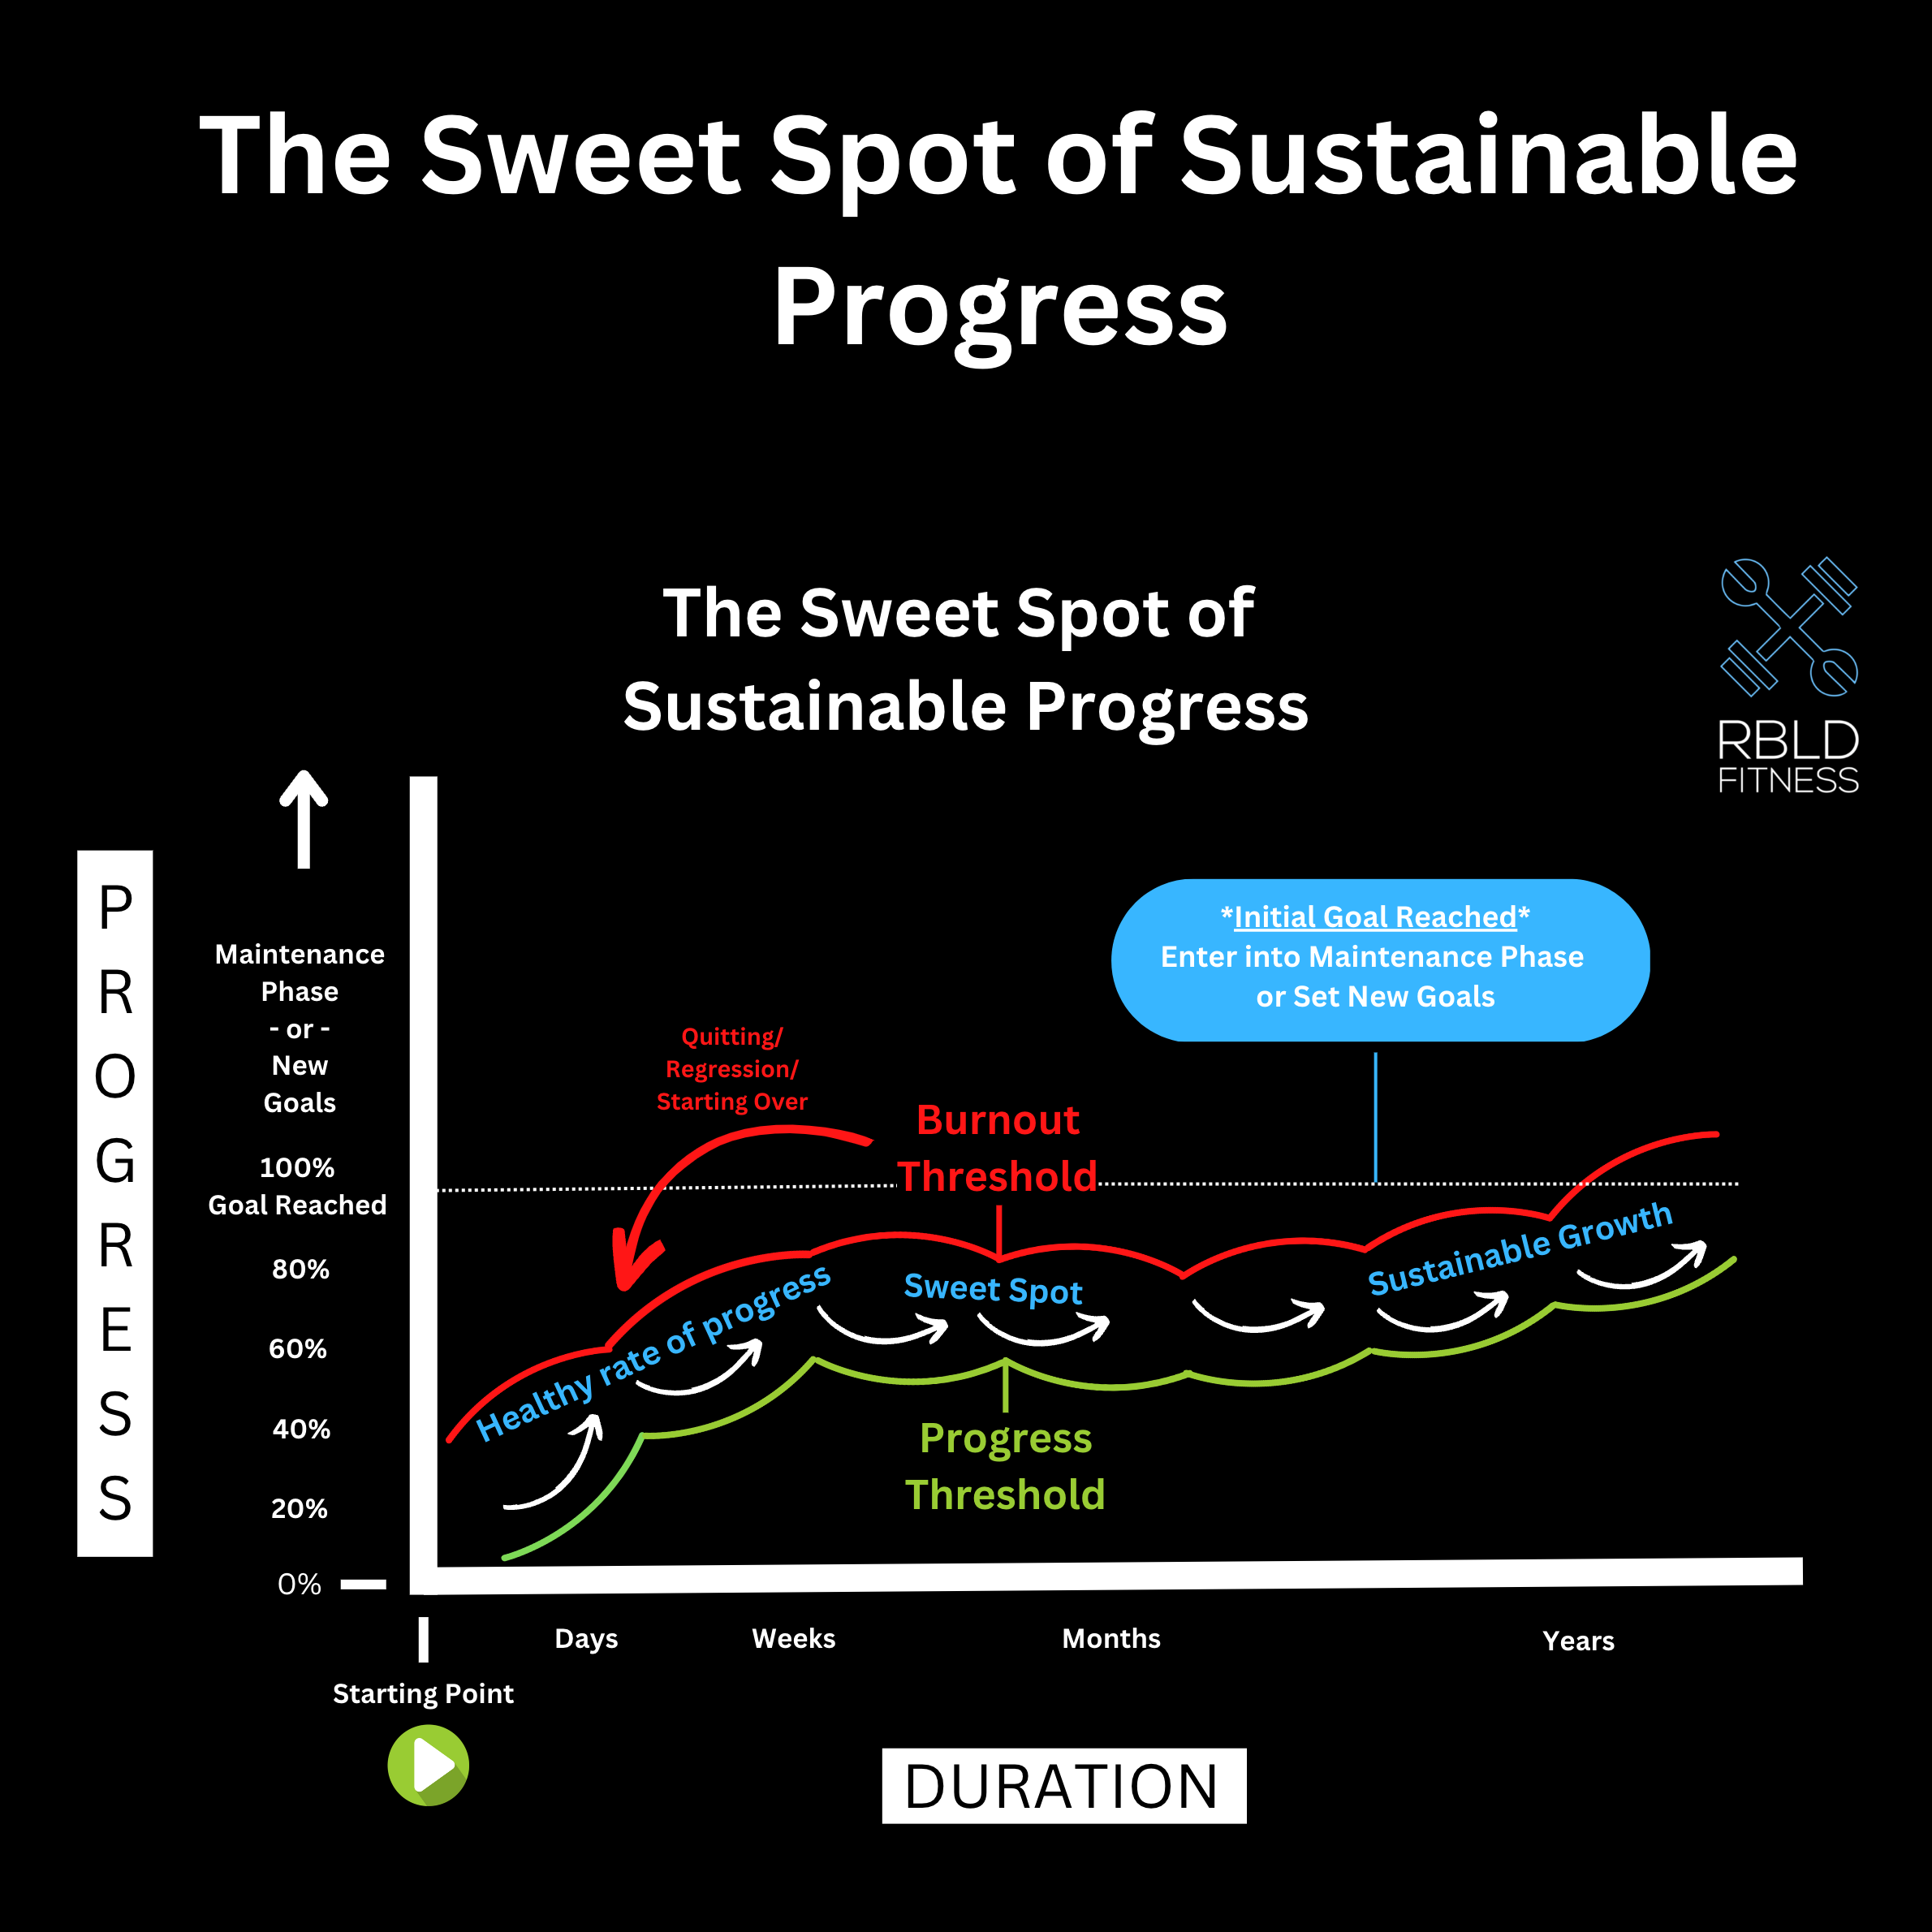 The Sweet Spot of Sustainable Progress